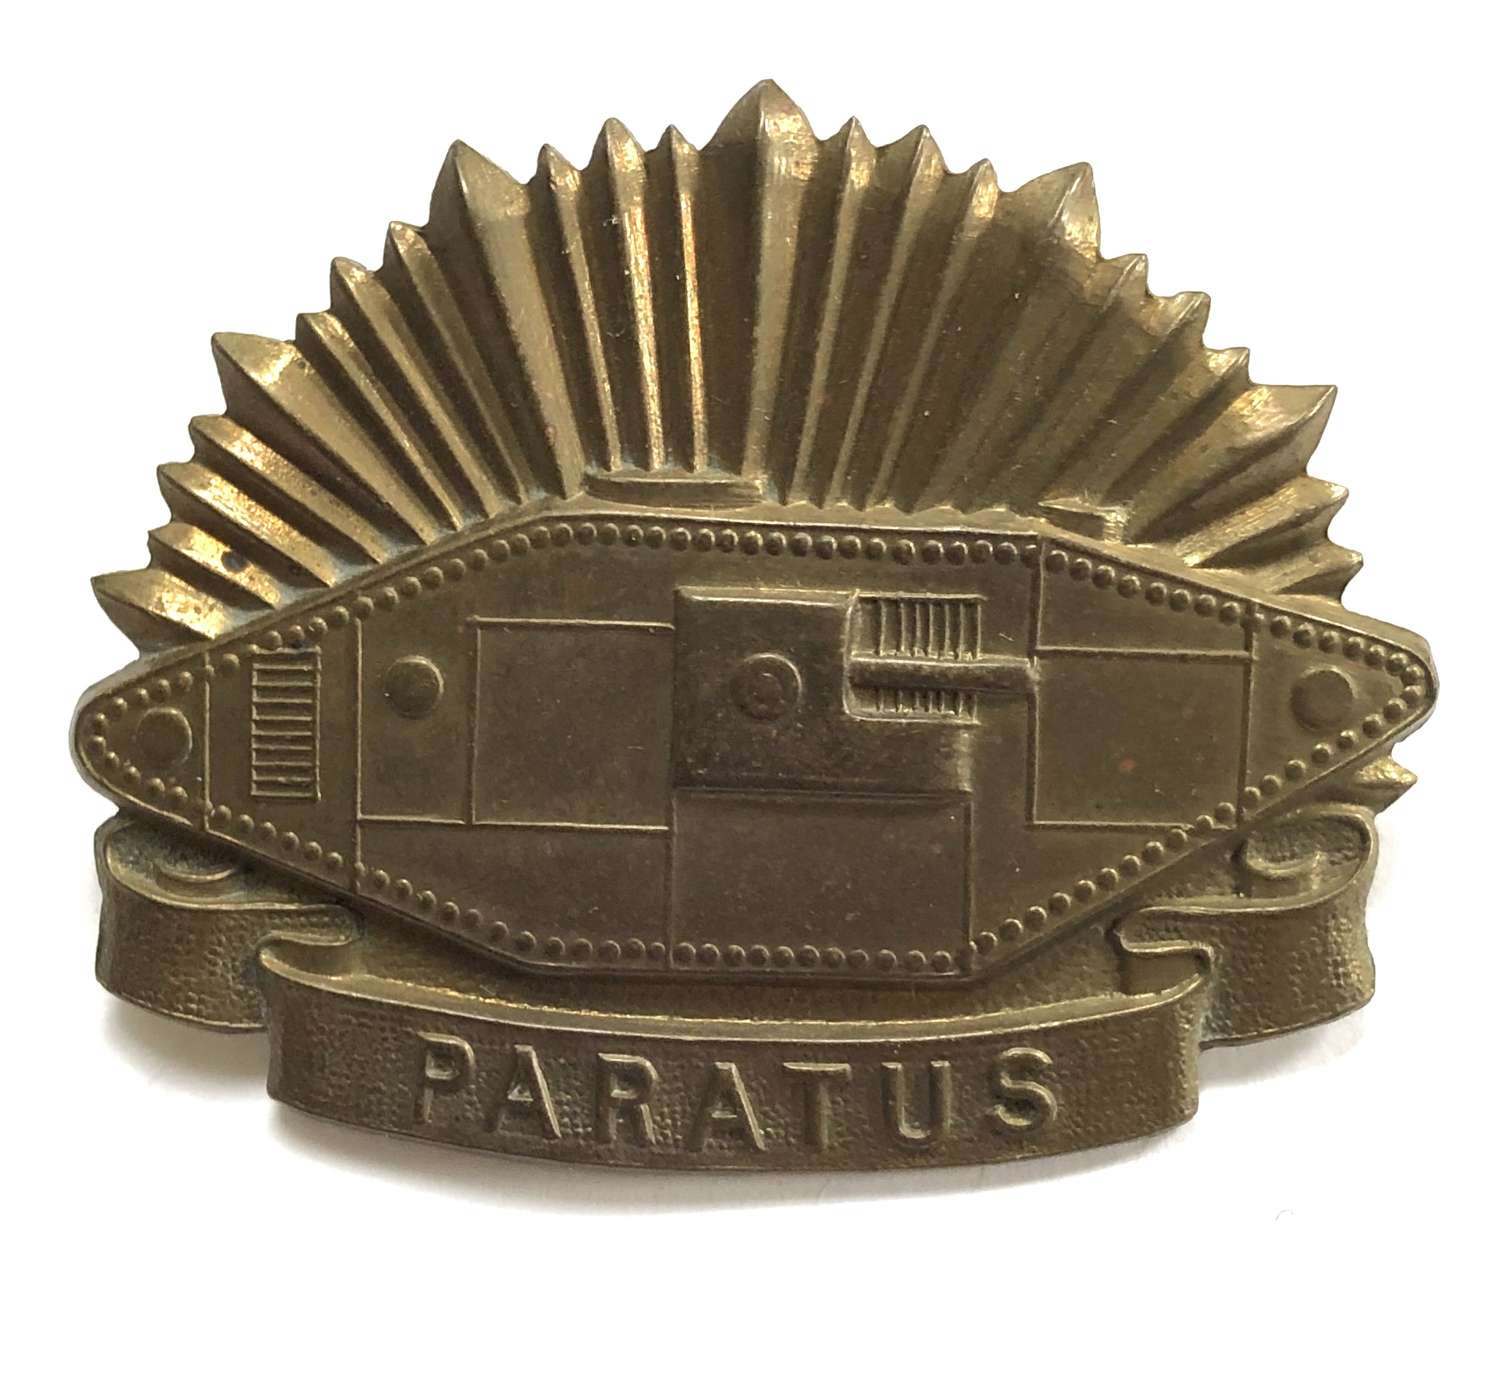 Australian Tank Corps hat badge circa 1939-42